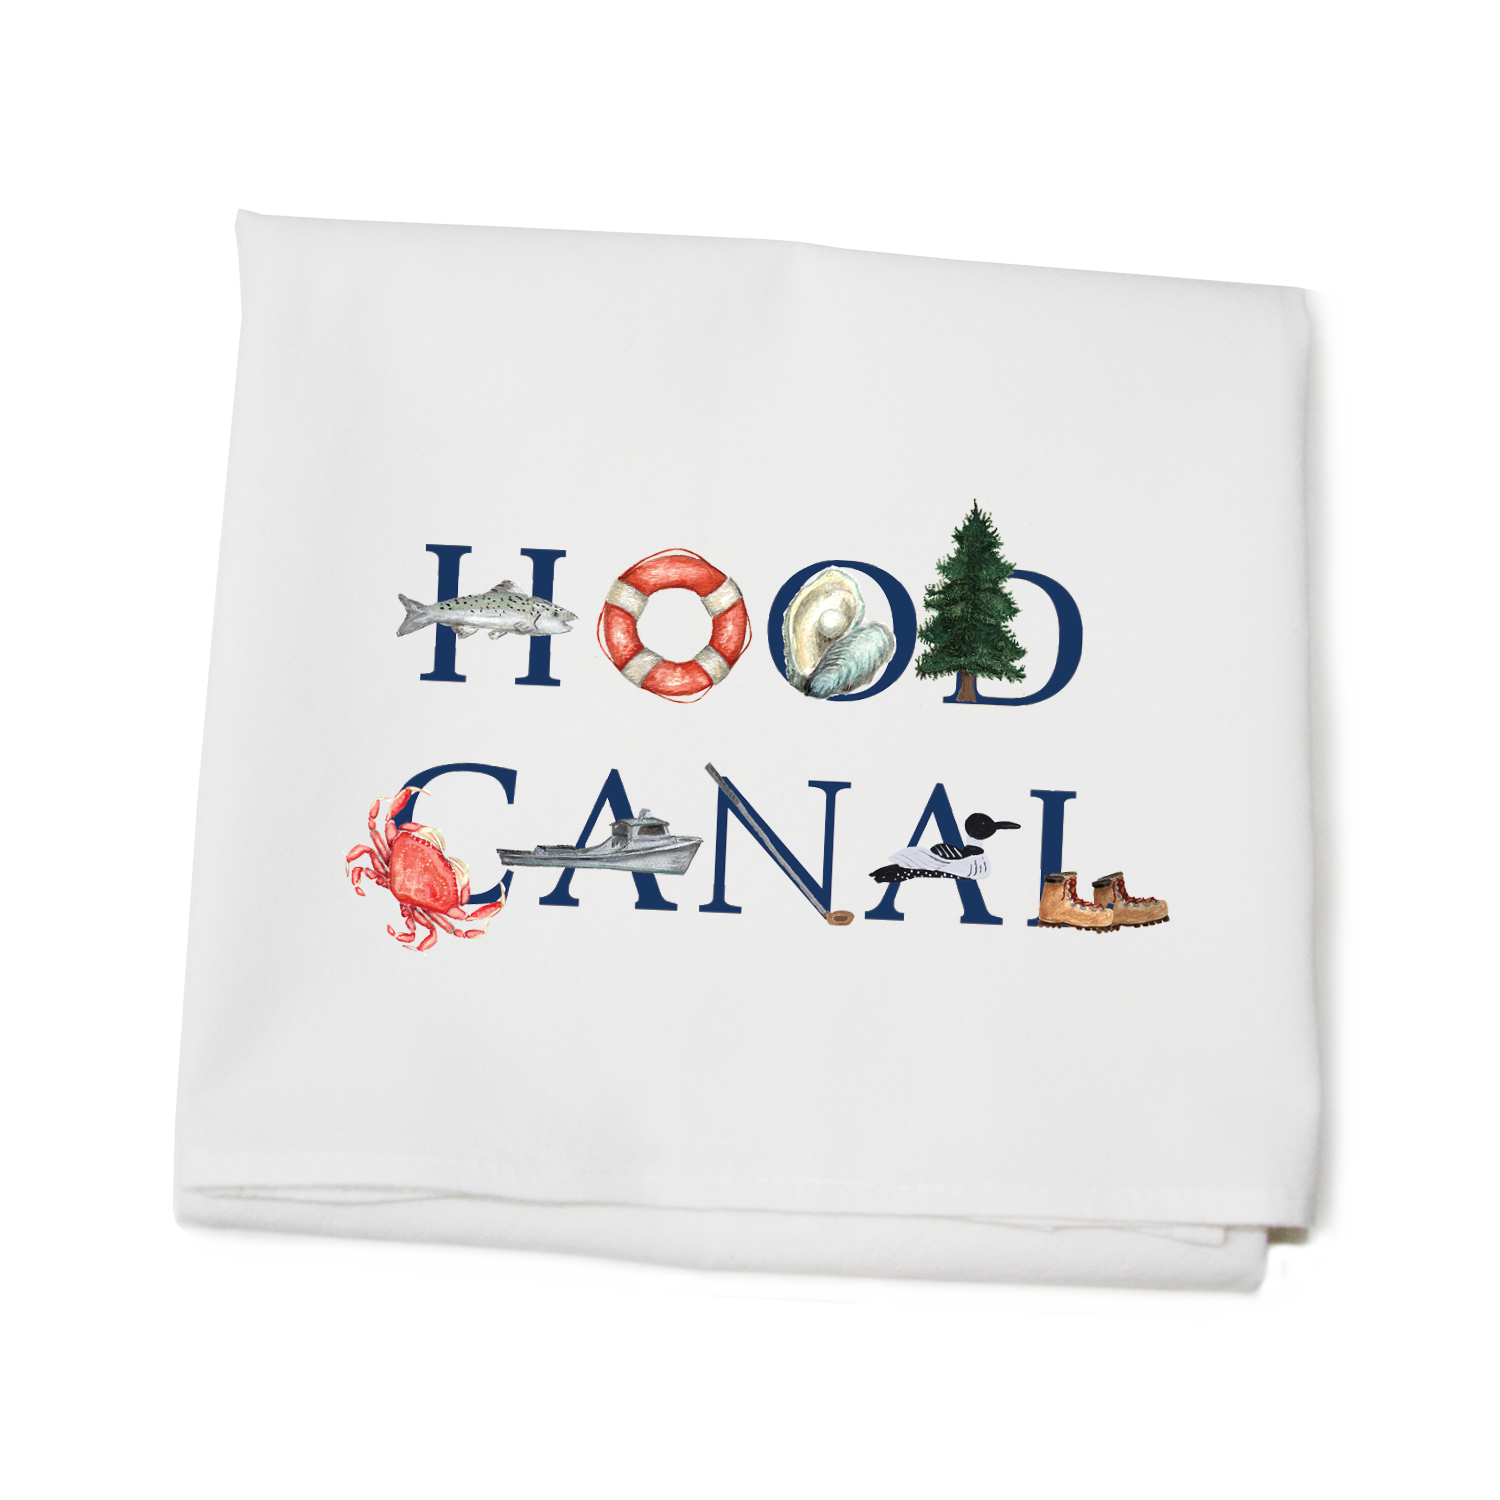 hood canal flour sack towel